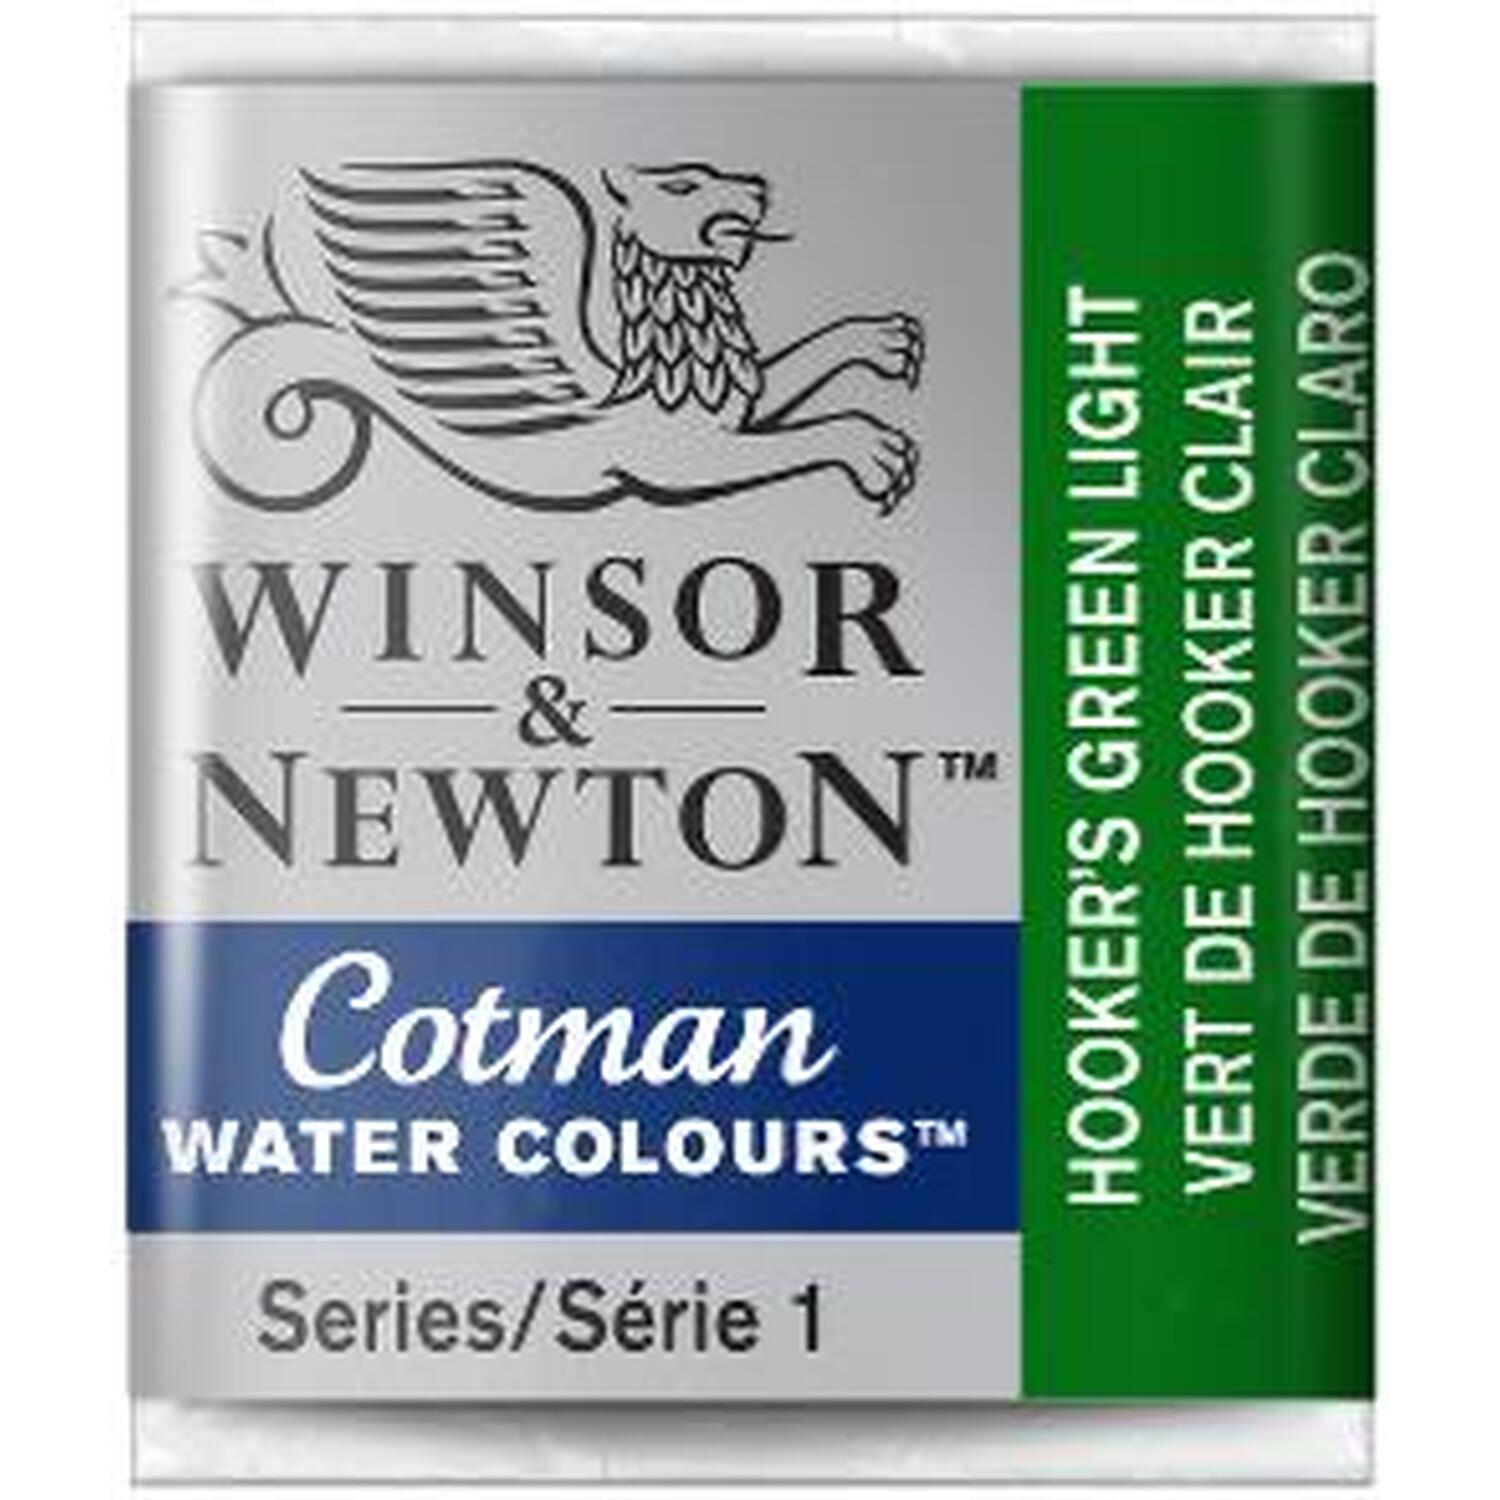 Winsor and Newton Cotman Watercolour Half Pan Paint - Hooker's Green Light Image